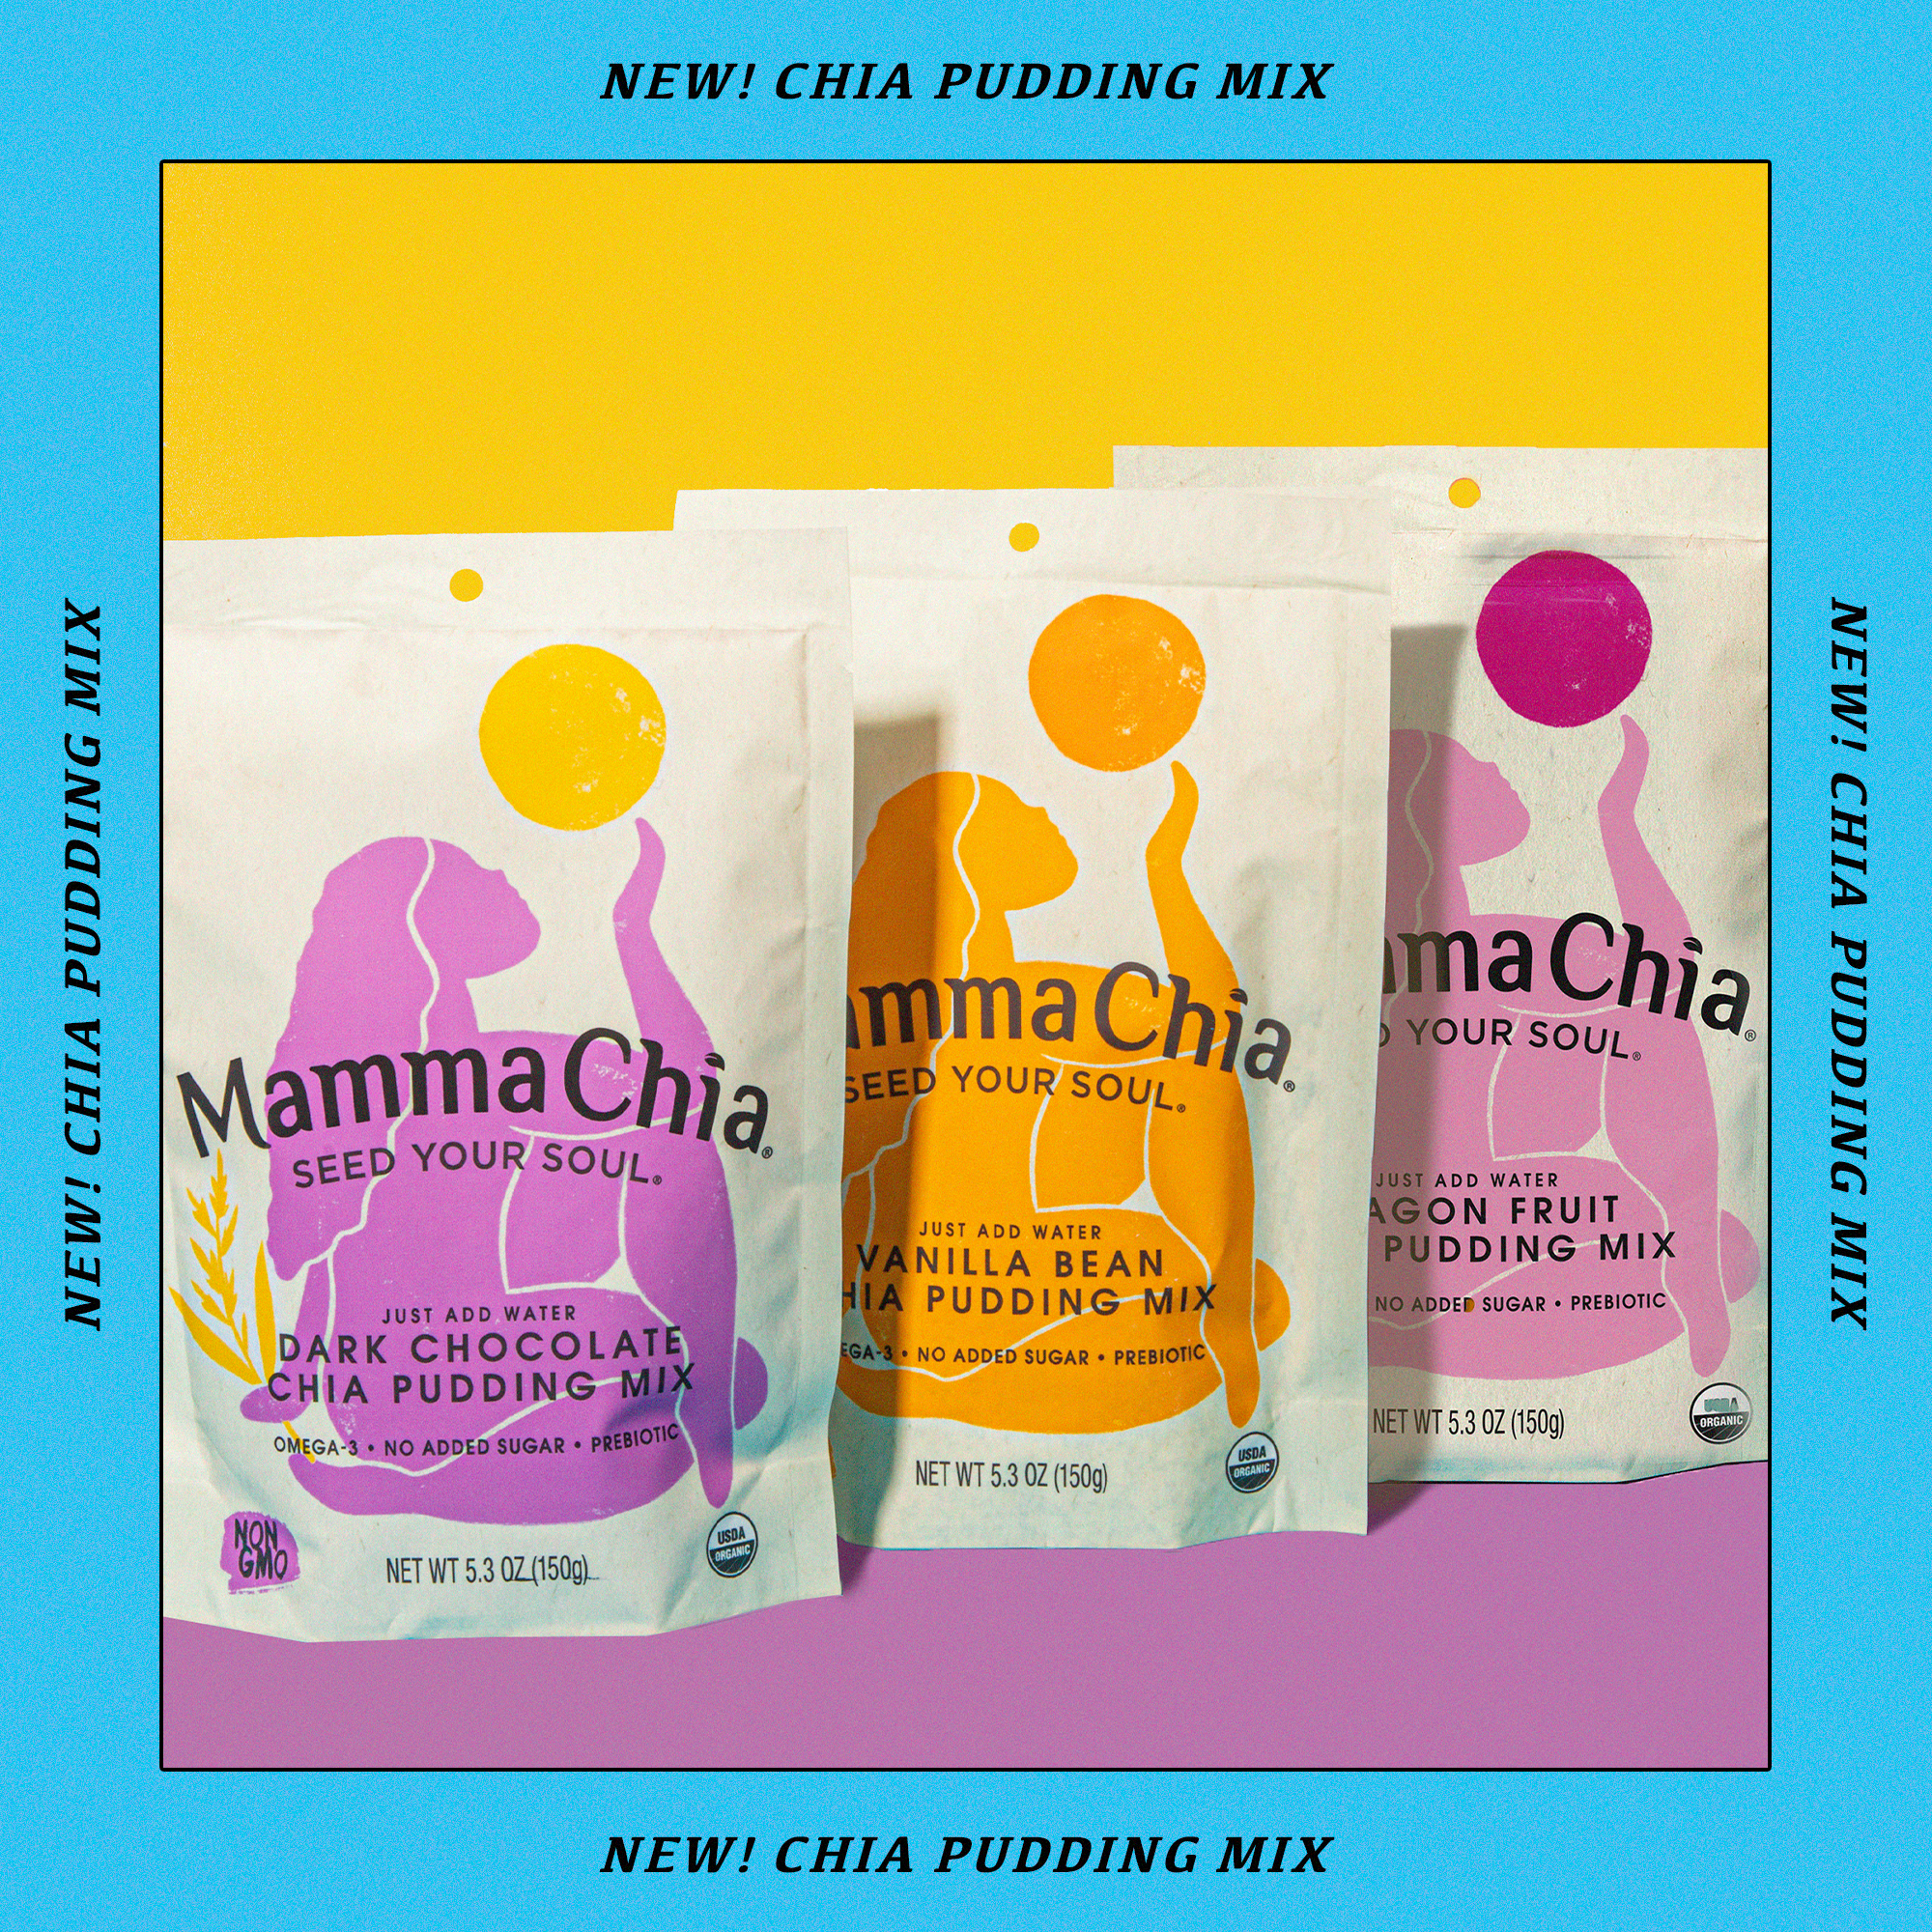 Introducing Mamma Chia Organic Chia Pudding